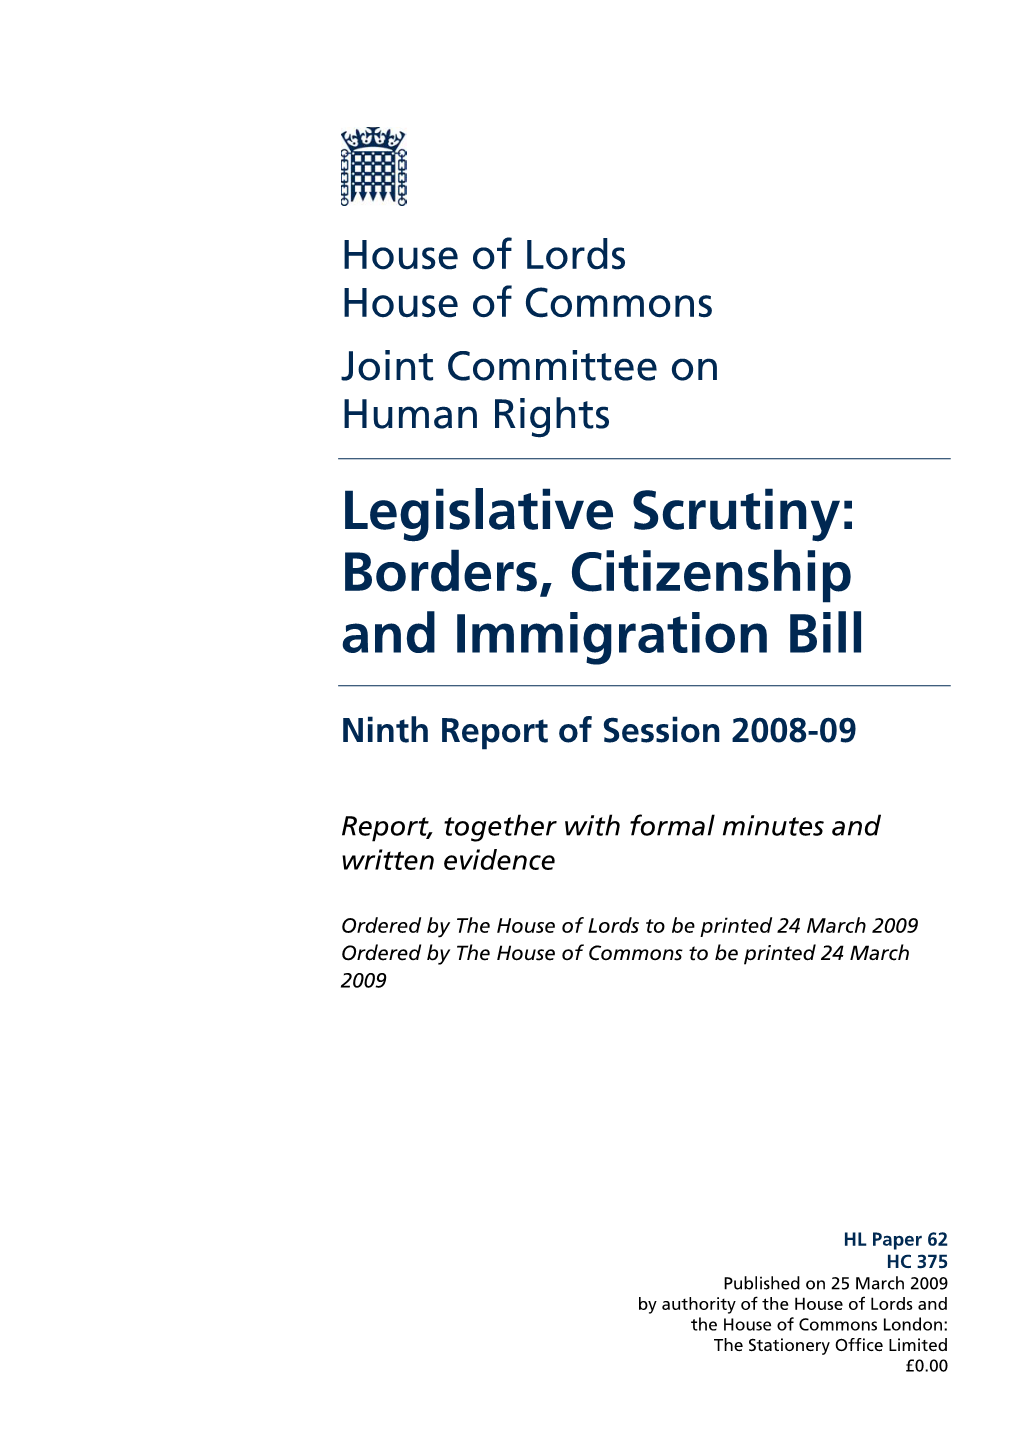 Legislative Scrutiny: Borders, Citizenship and Immigration Bill